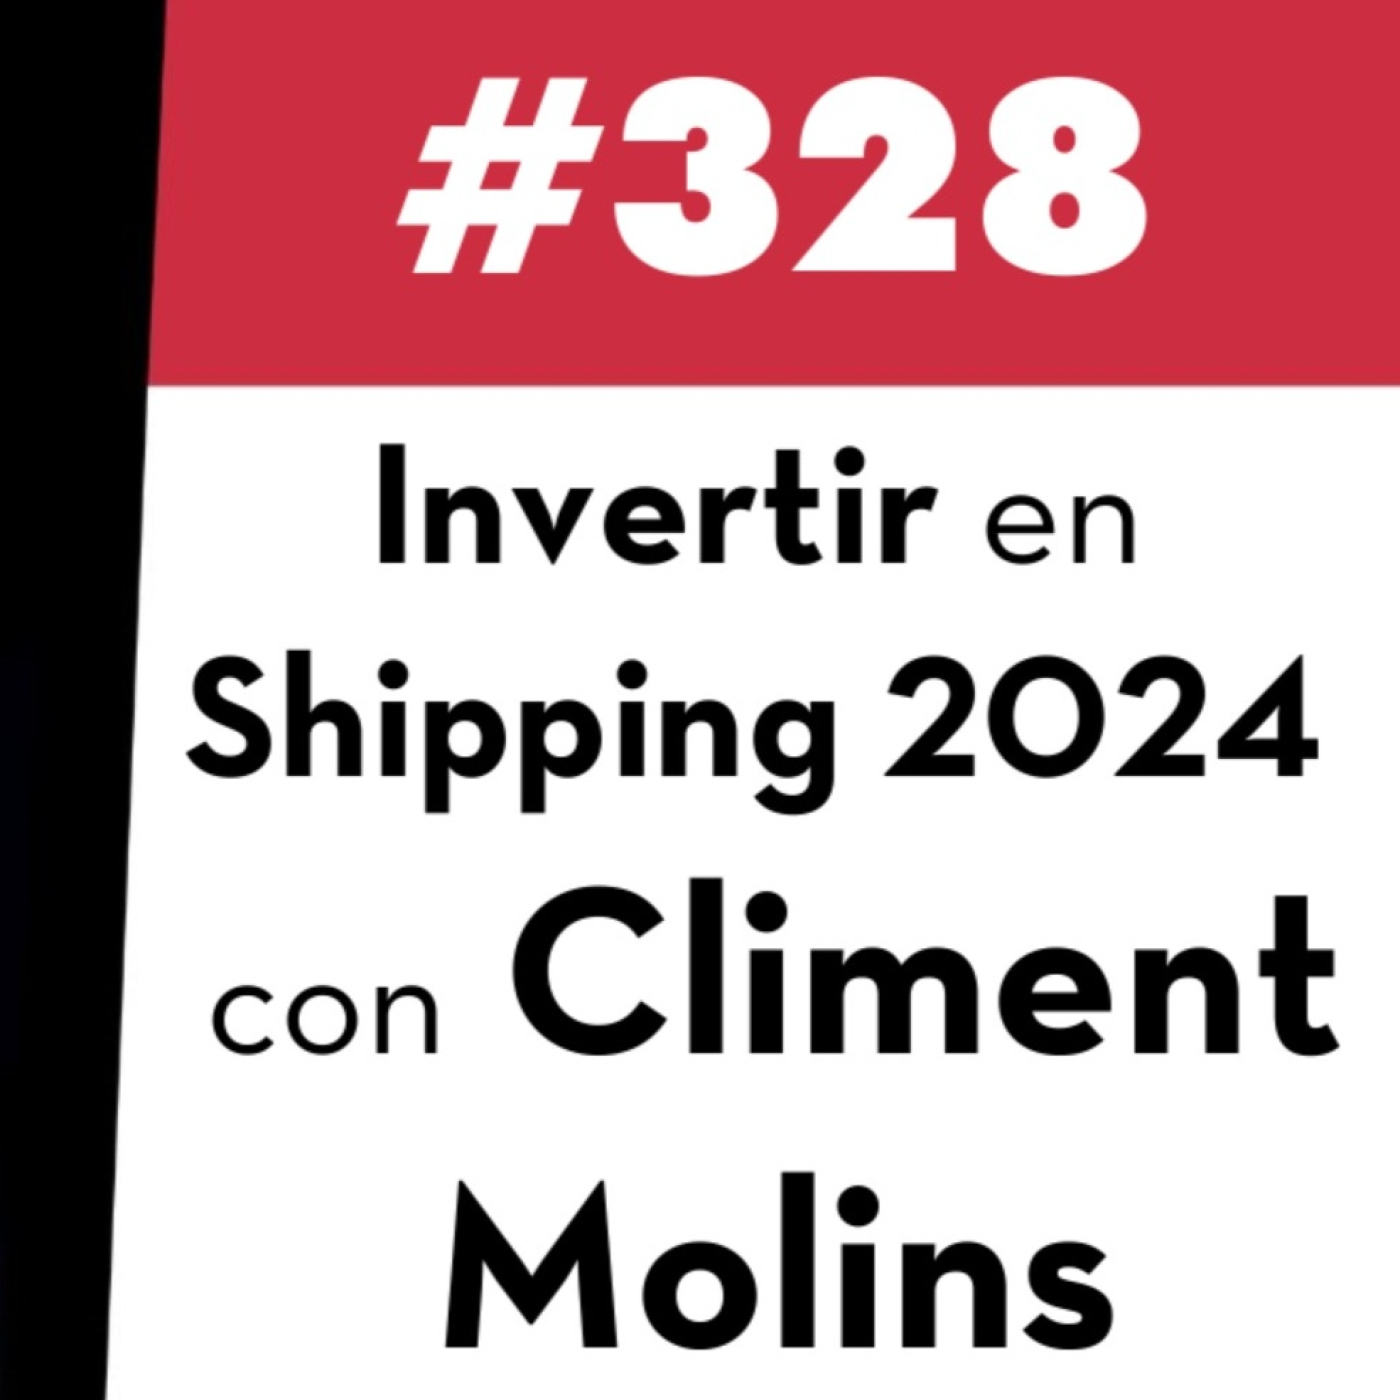 328. Invertir en Shipping 2024 con Climent Molins